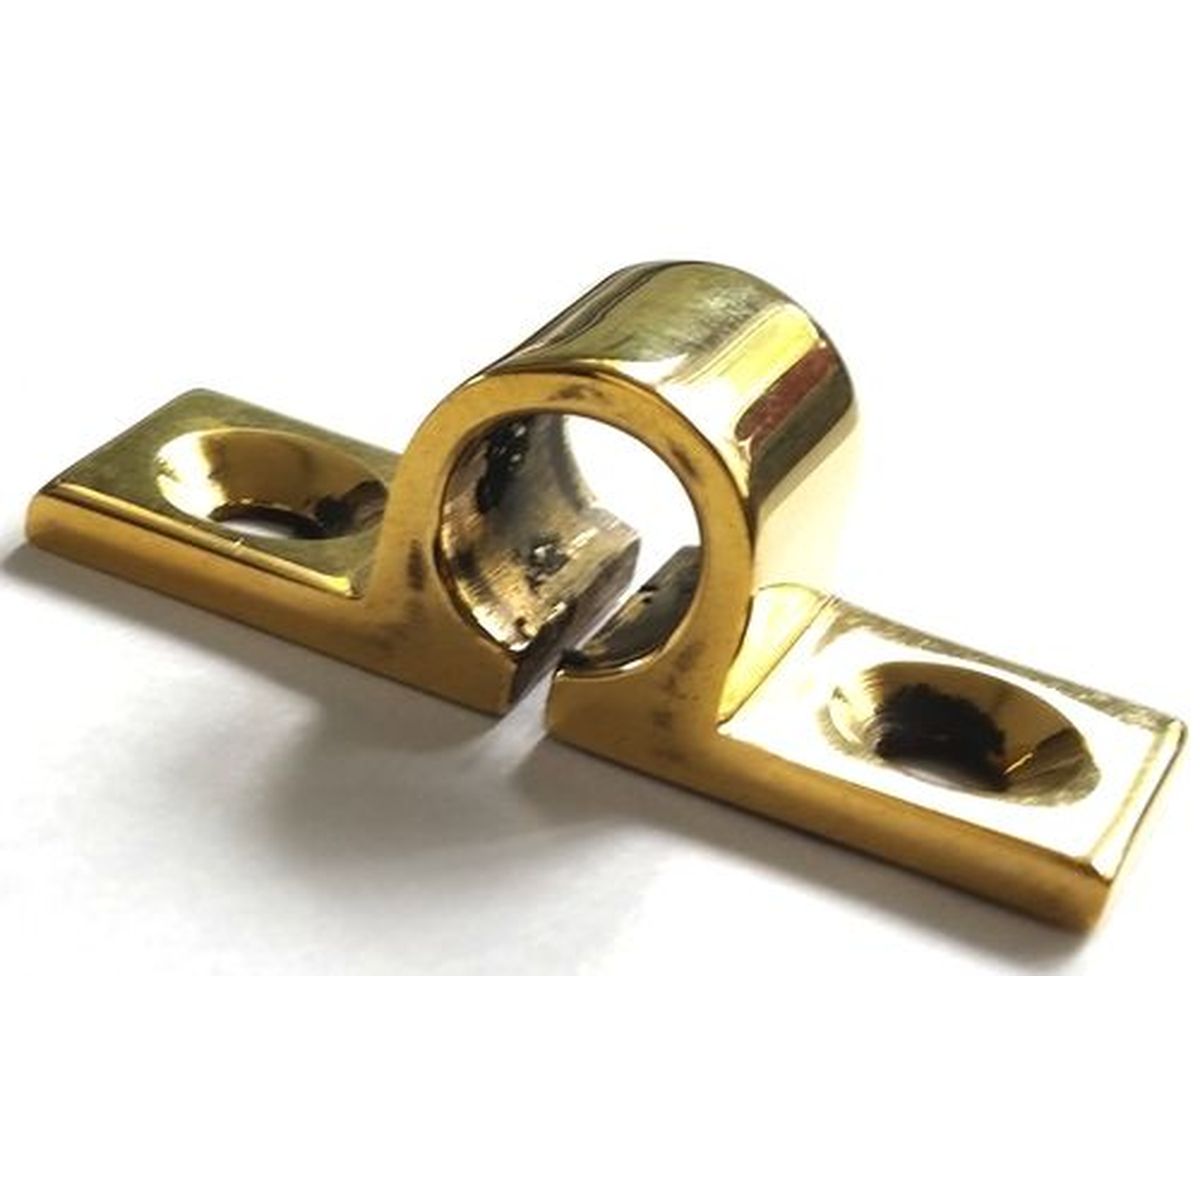 Brass striking bush 8mm for pin bolt